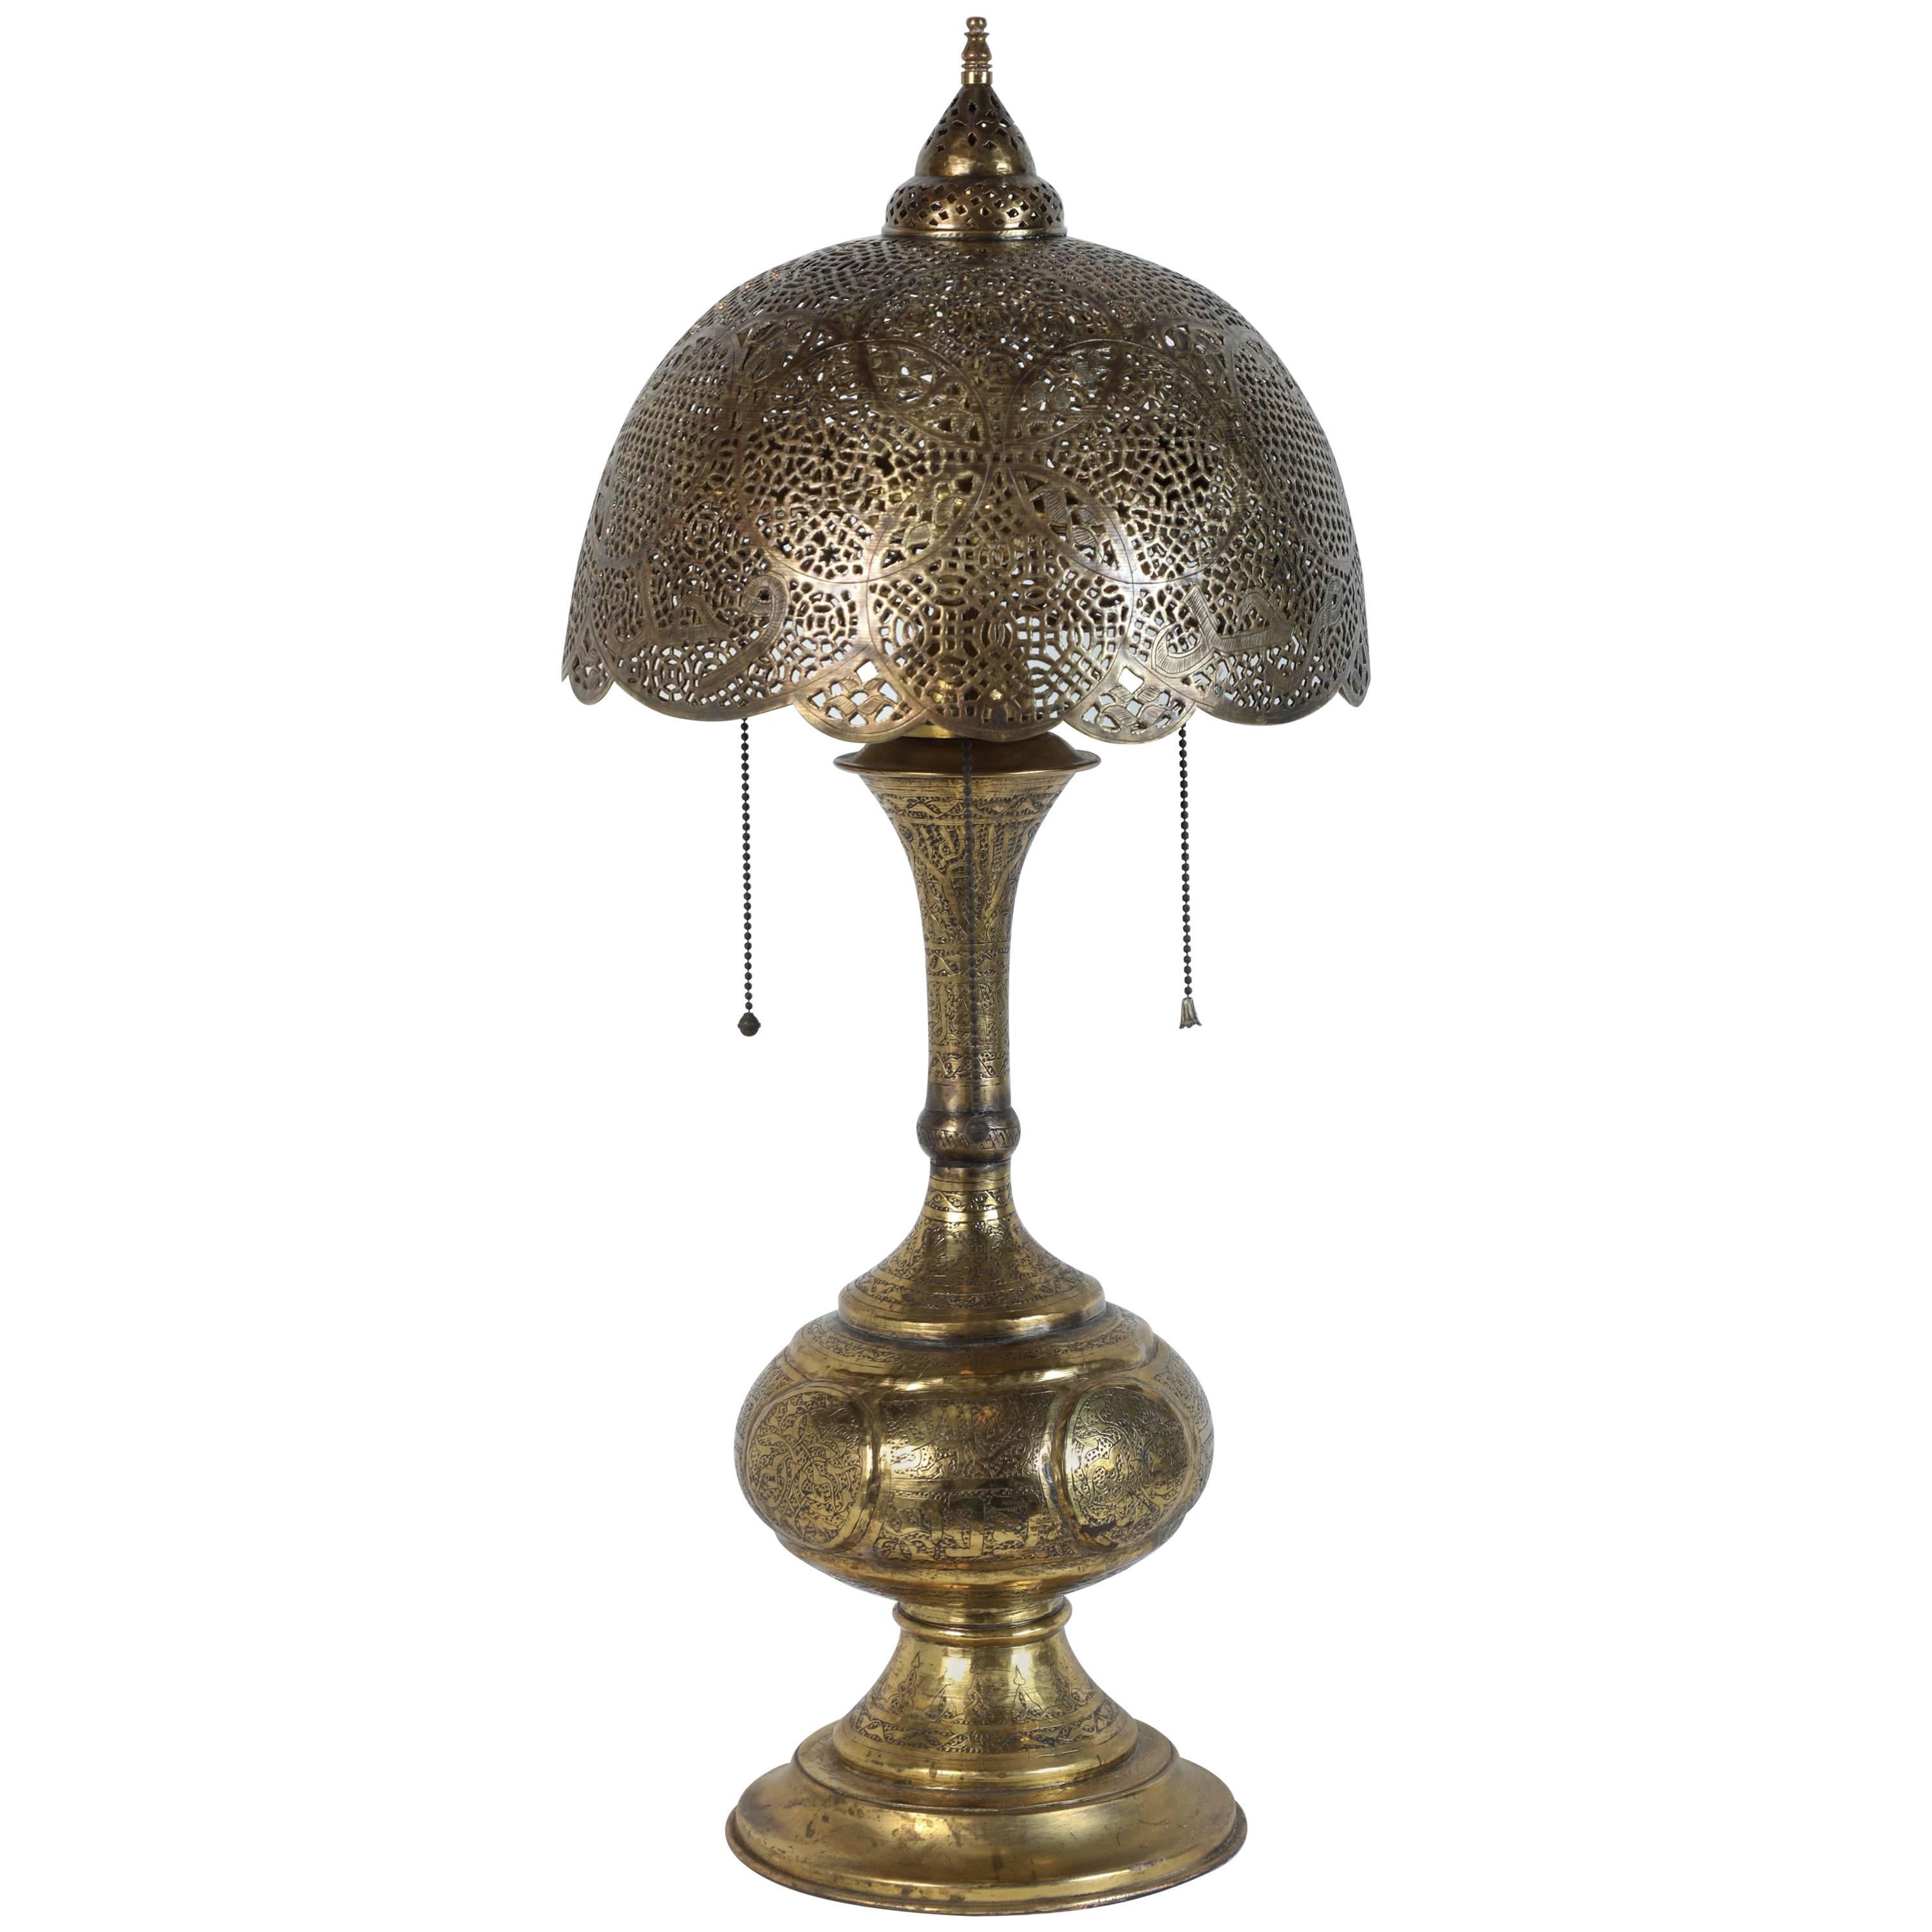 Moorish Brass Syrian Table Lamp with Arabic Calligraphy Writing